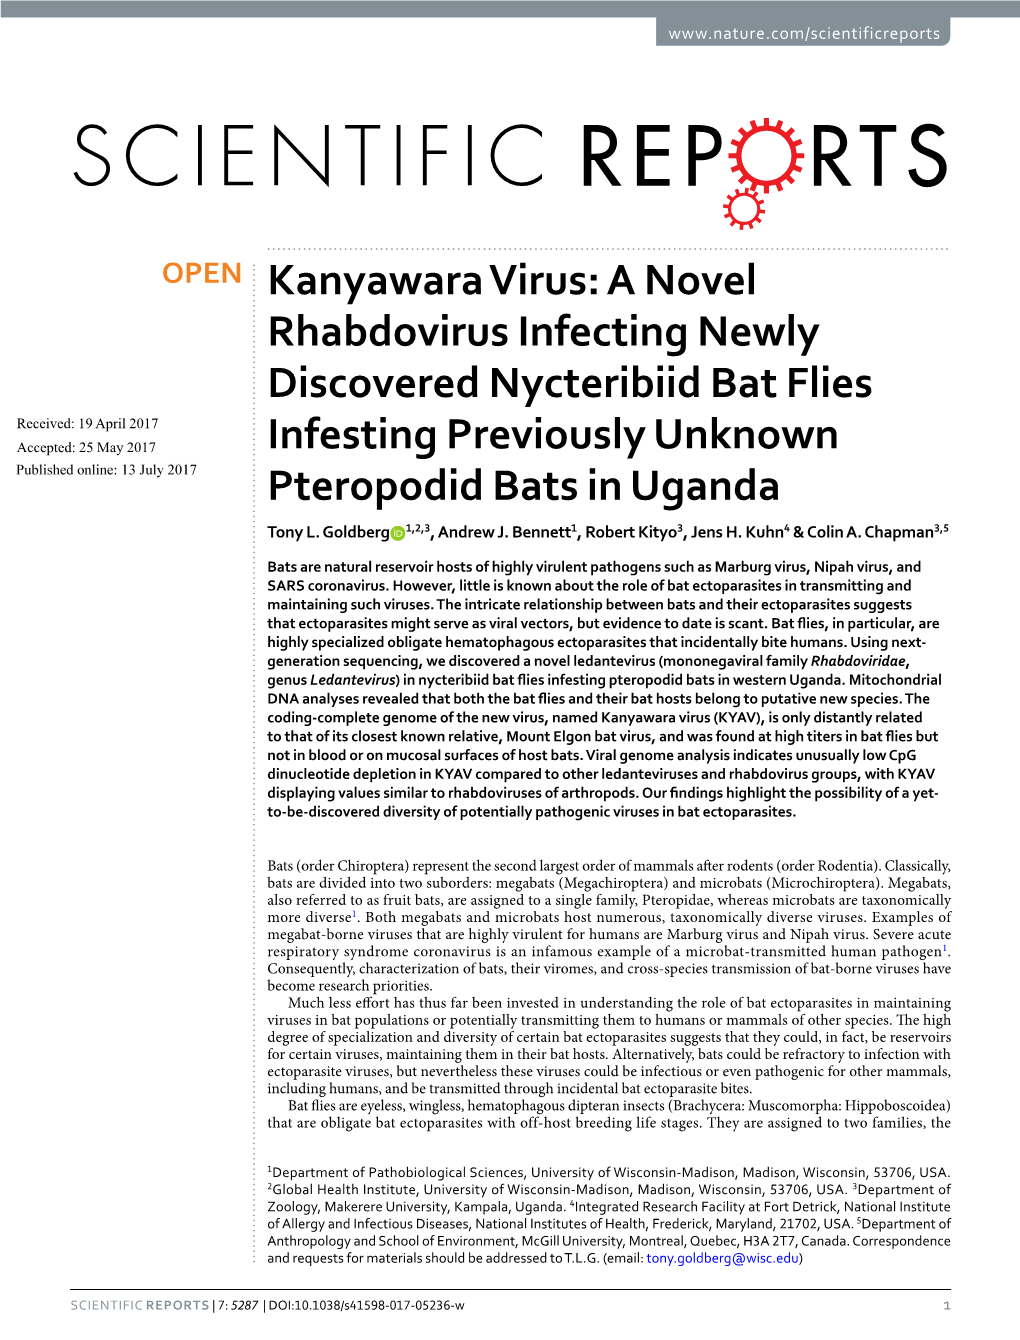 A Novel Rhabdovirus Infecting Newly Discovered Nycteribiid Bat Flies